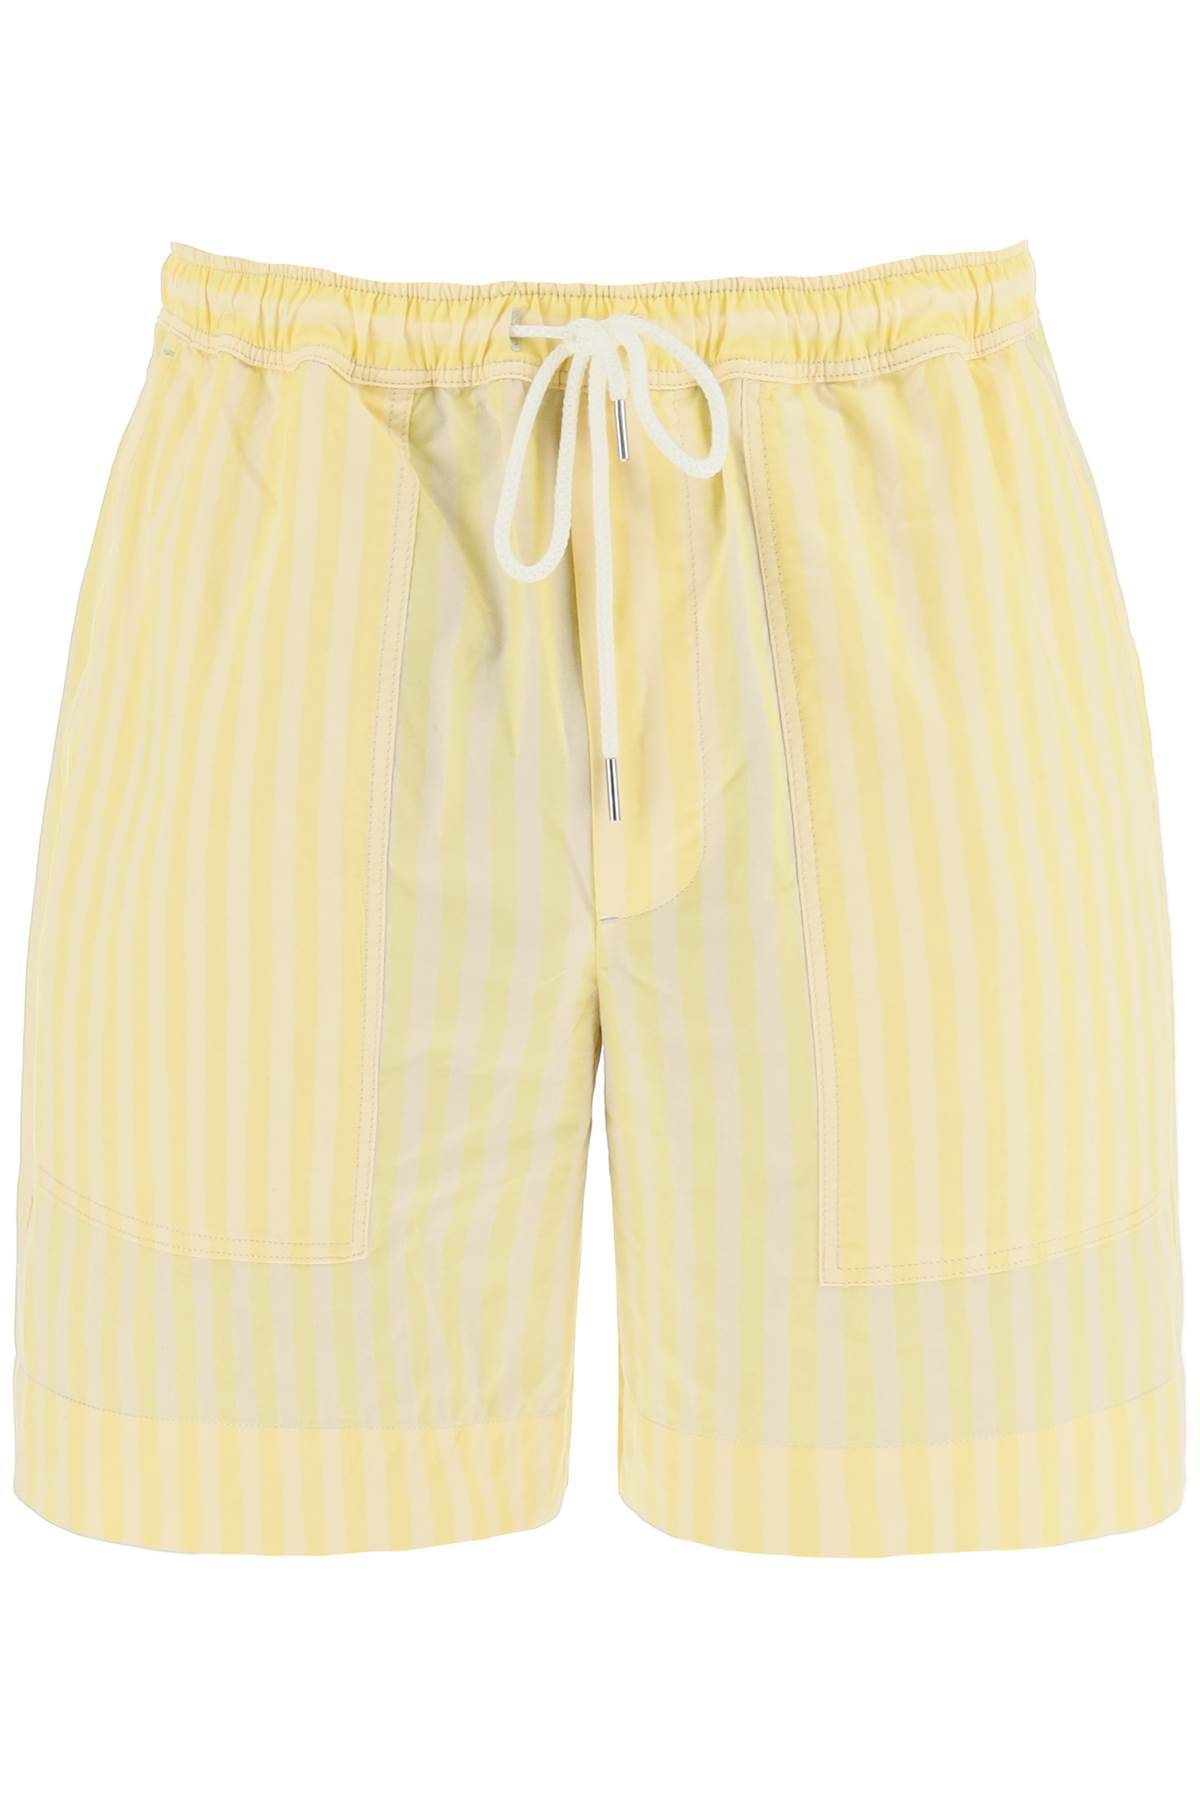 Maison Kitsuné MAISON KITSUNE striped poplin bermuda shorts for